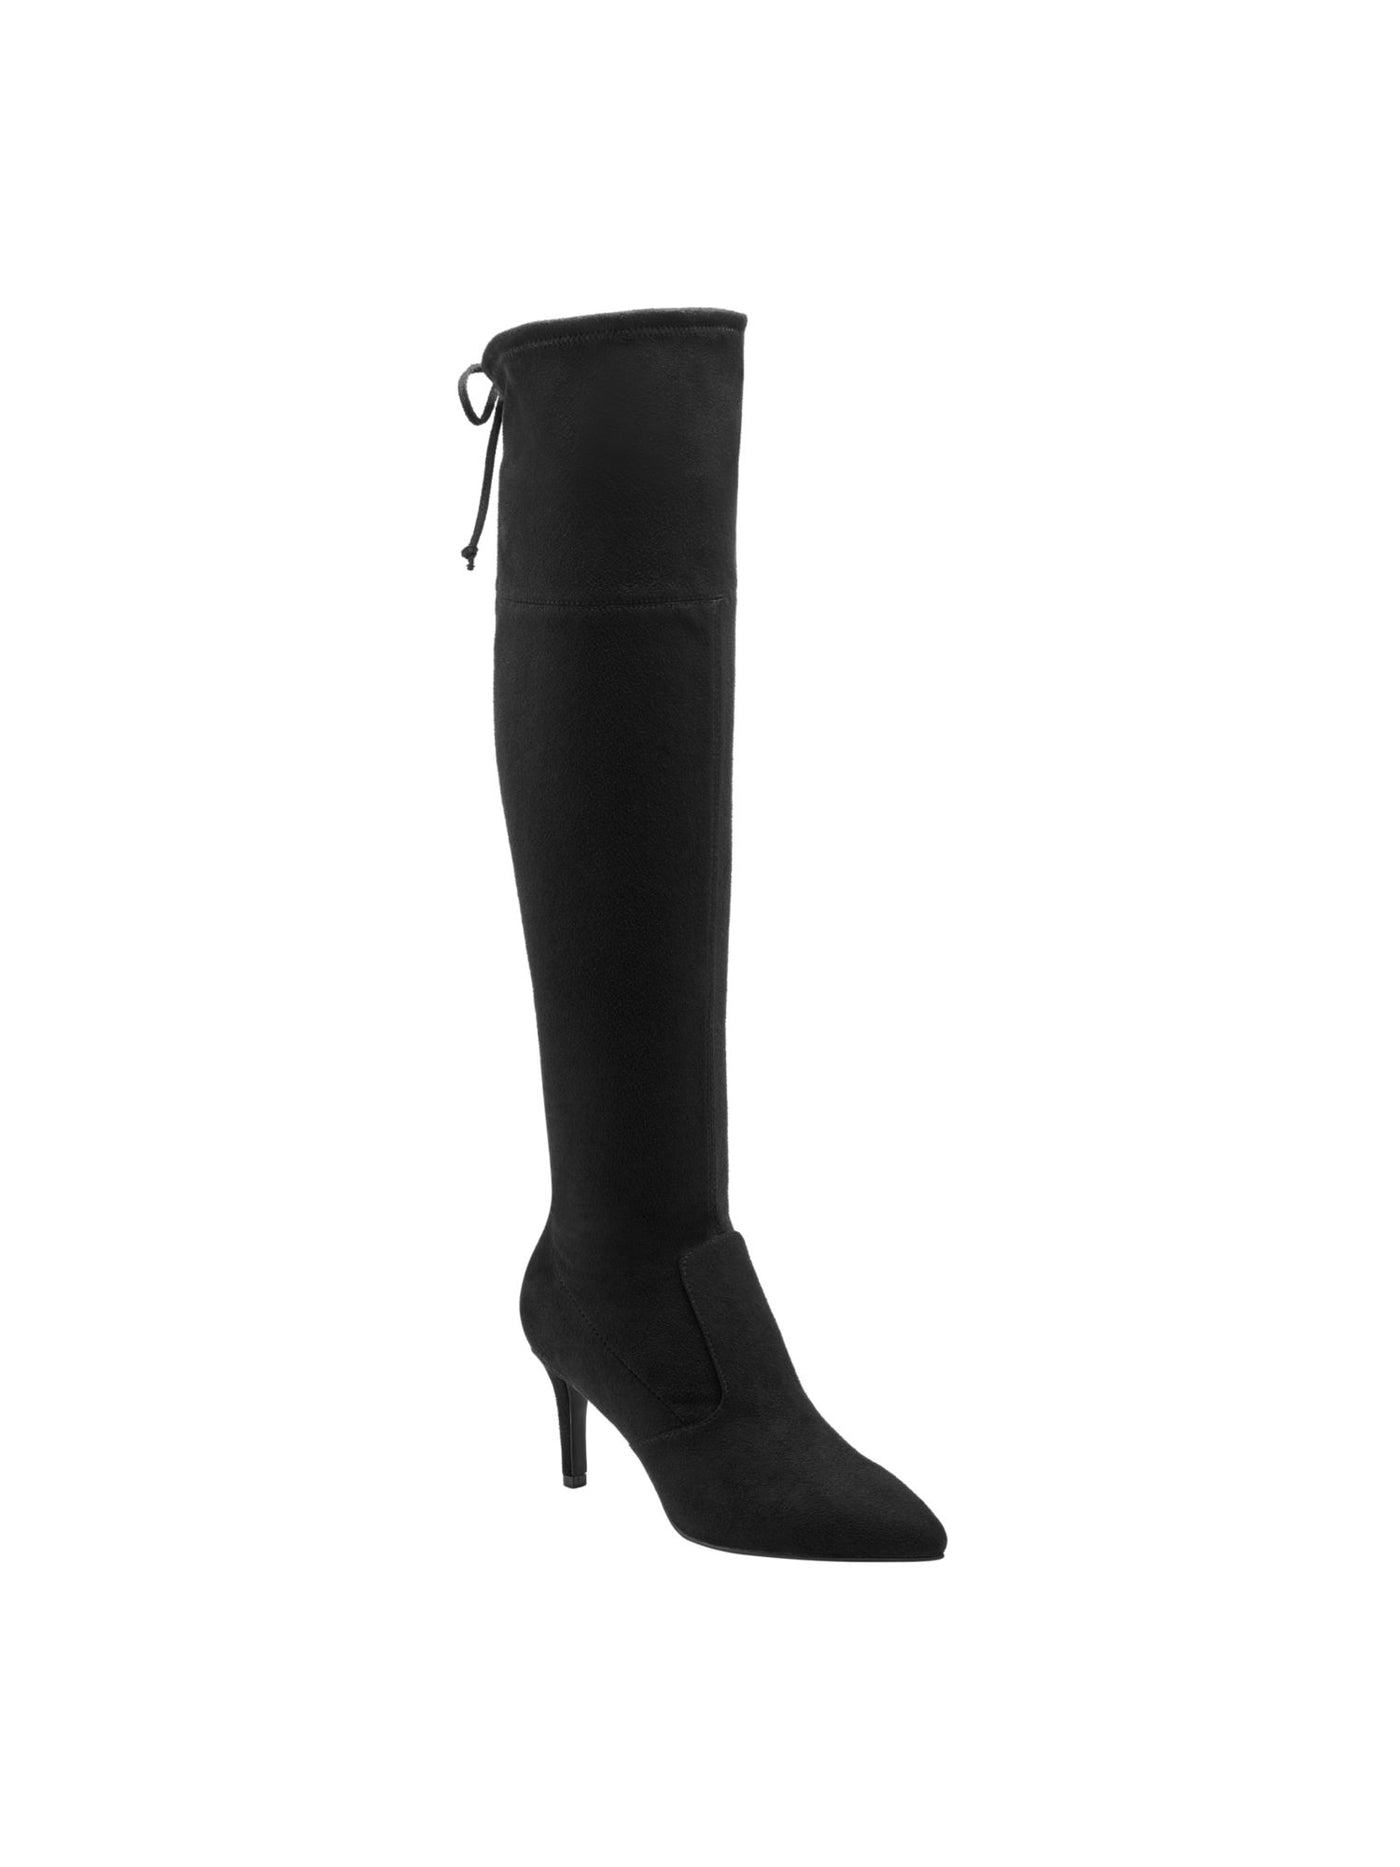 BANDOLINO Womens Black Galyce Pointy Toe Kitten Heel Zip-Up Dress Boots 9 M